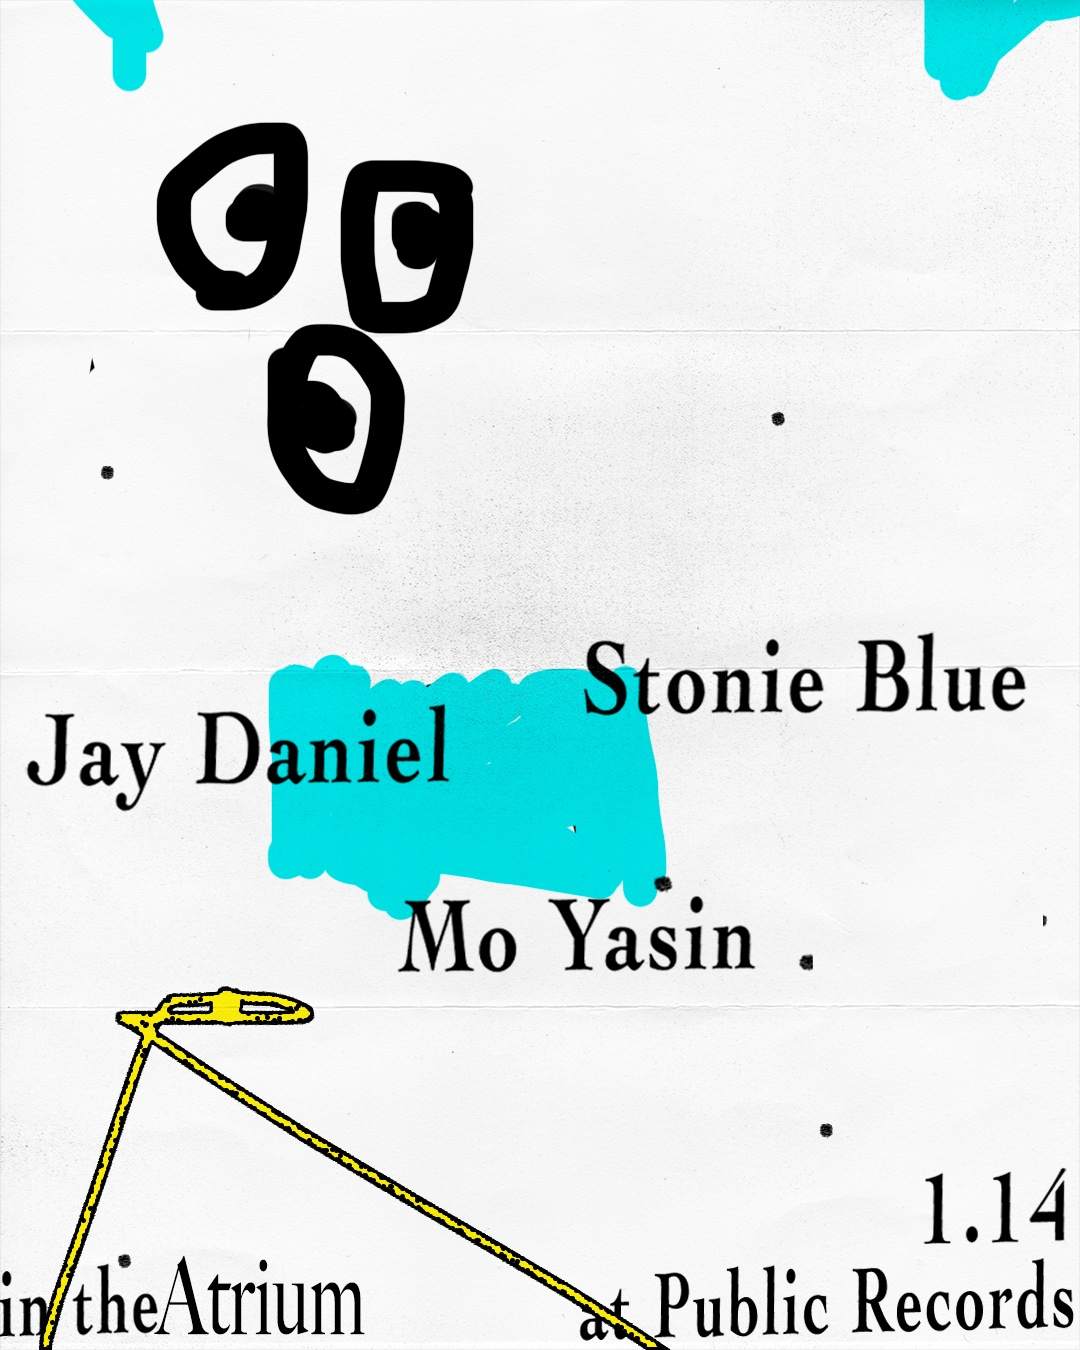 Sunday in The Atrium: Jay Daniel + Mo Yasin + Stonie Blue - フライヤー表